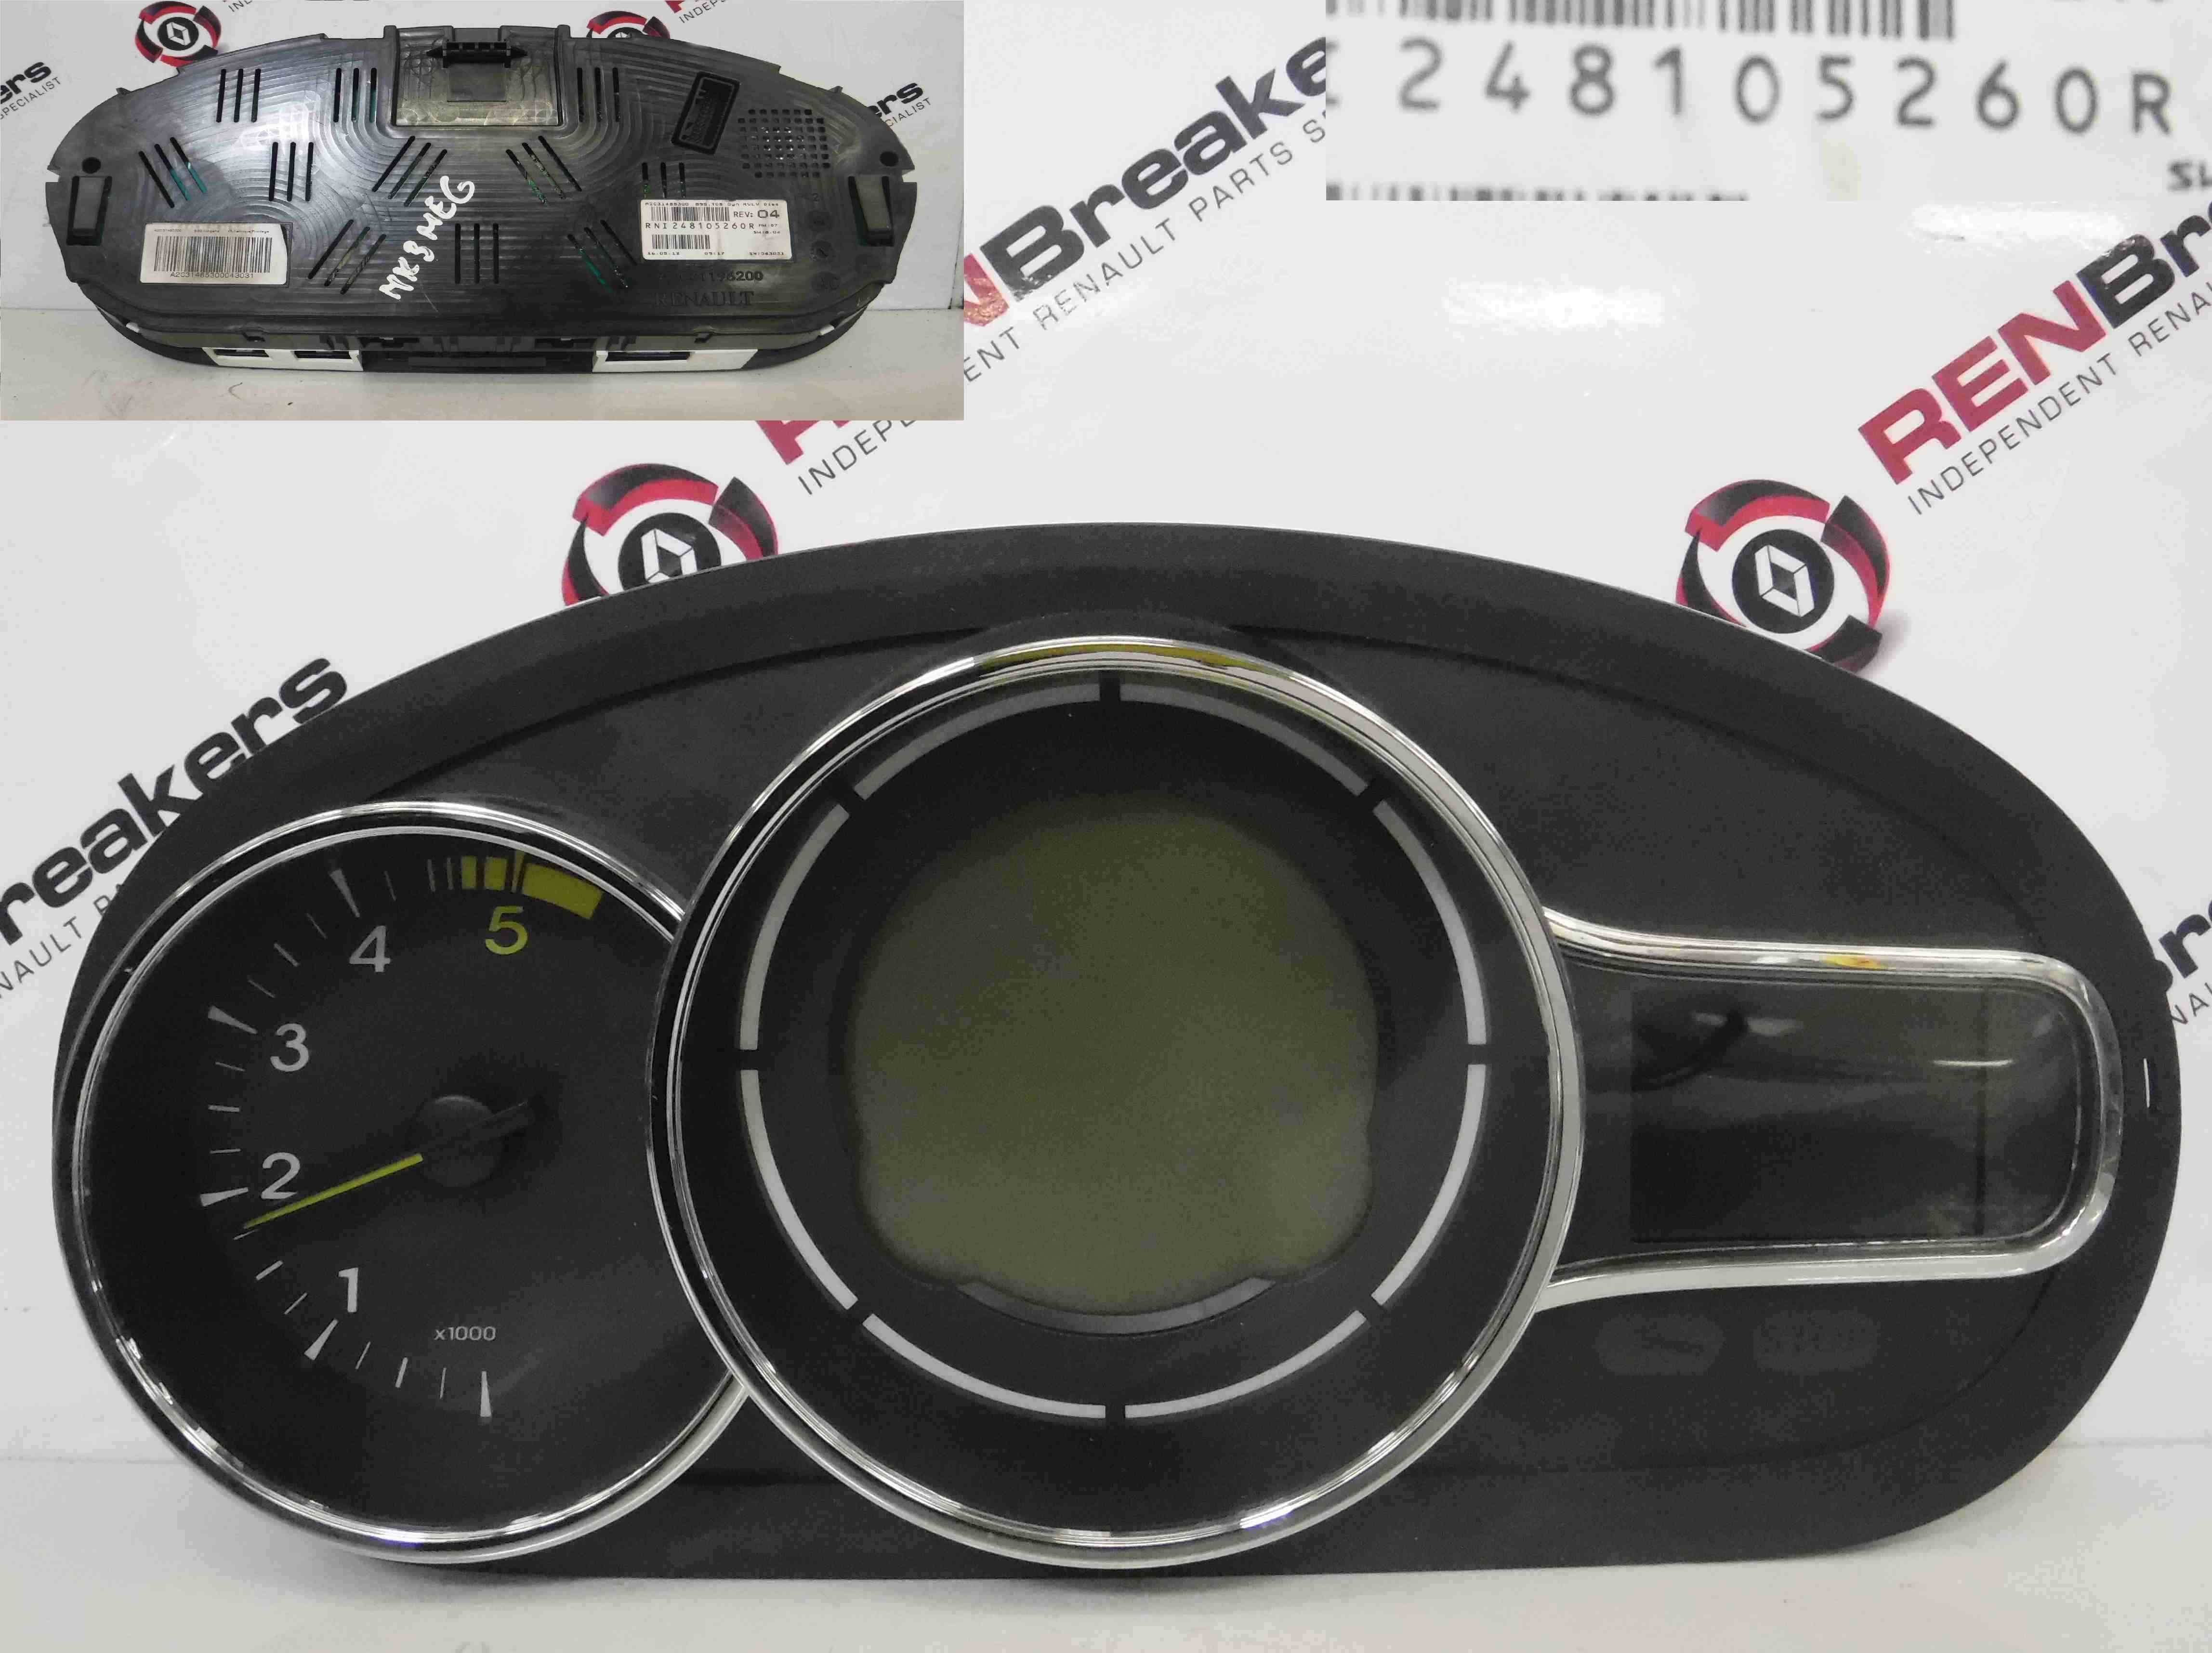 Renault Megane MK3 2008-2014 Instrument Panel Dials Clocks 248105260R